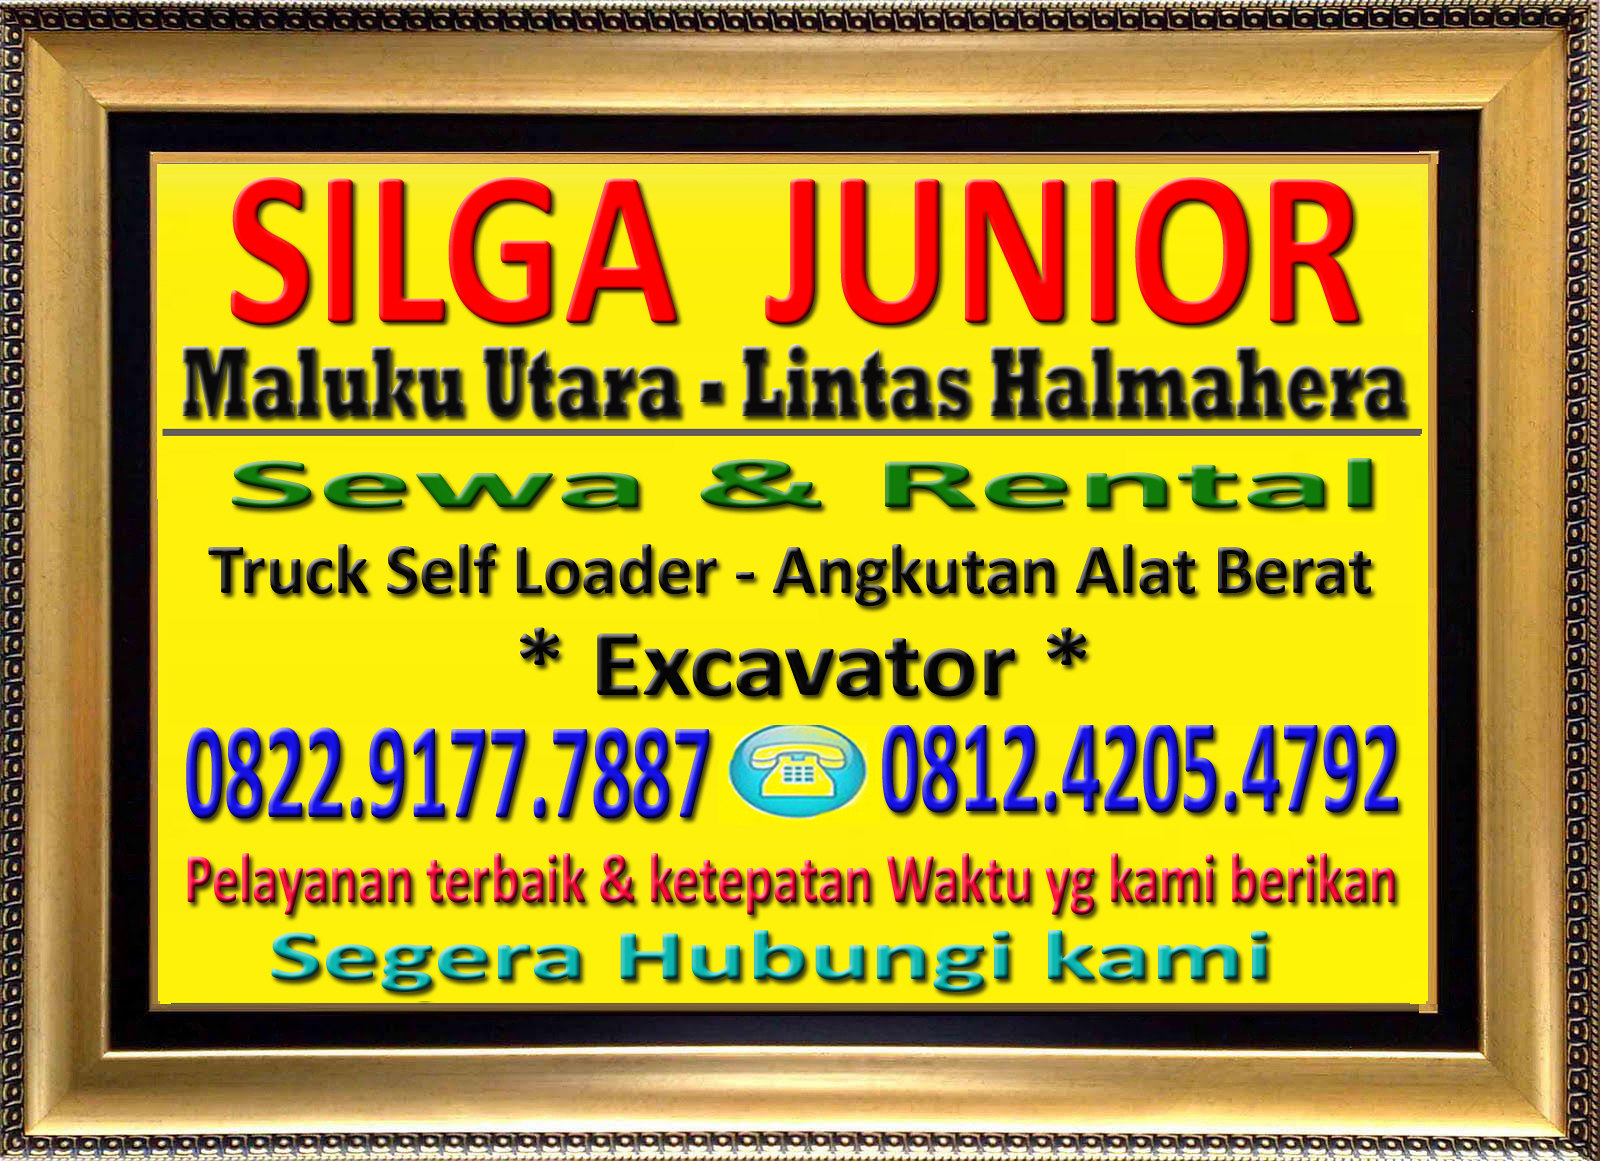 Silga Junior - Trans Maluku Utara - Halmahera